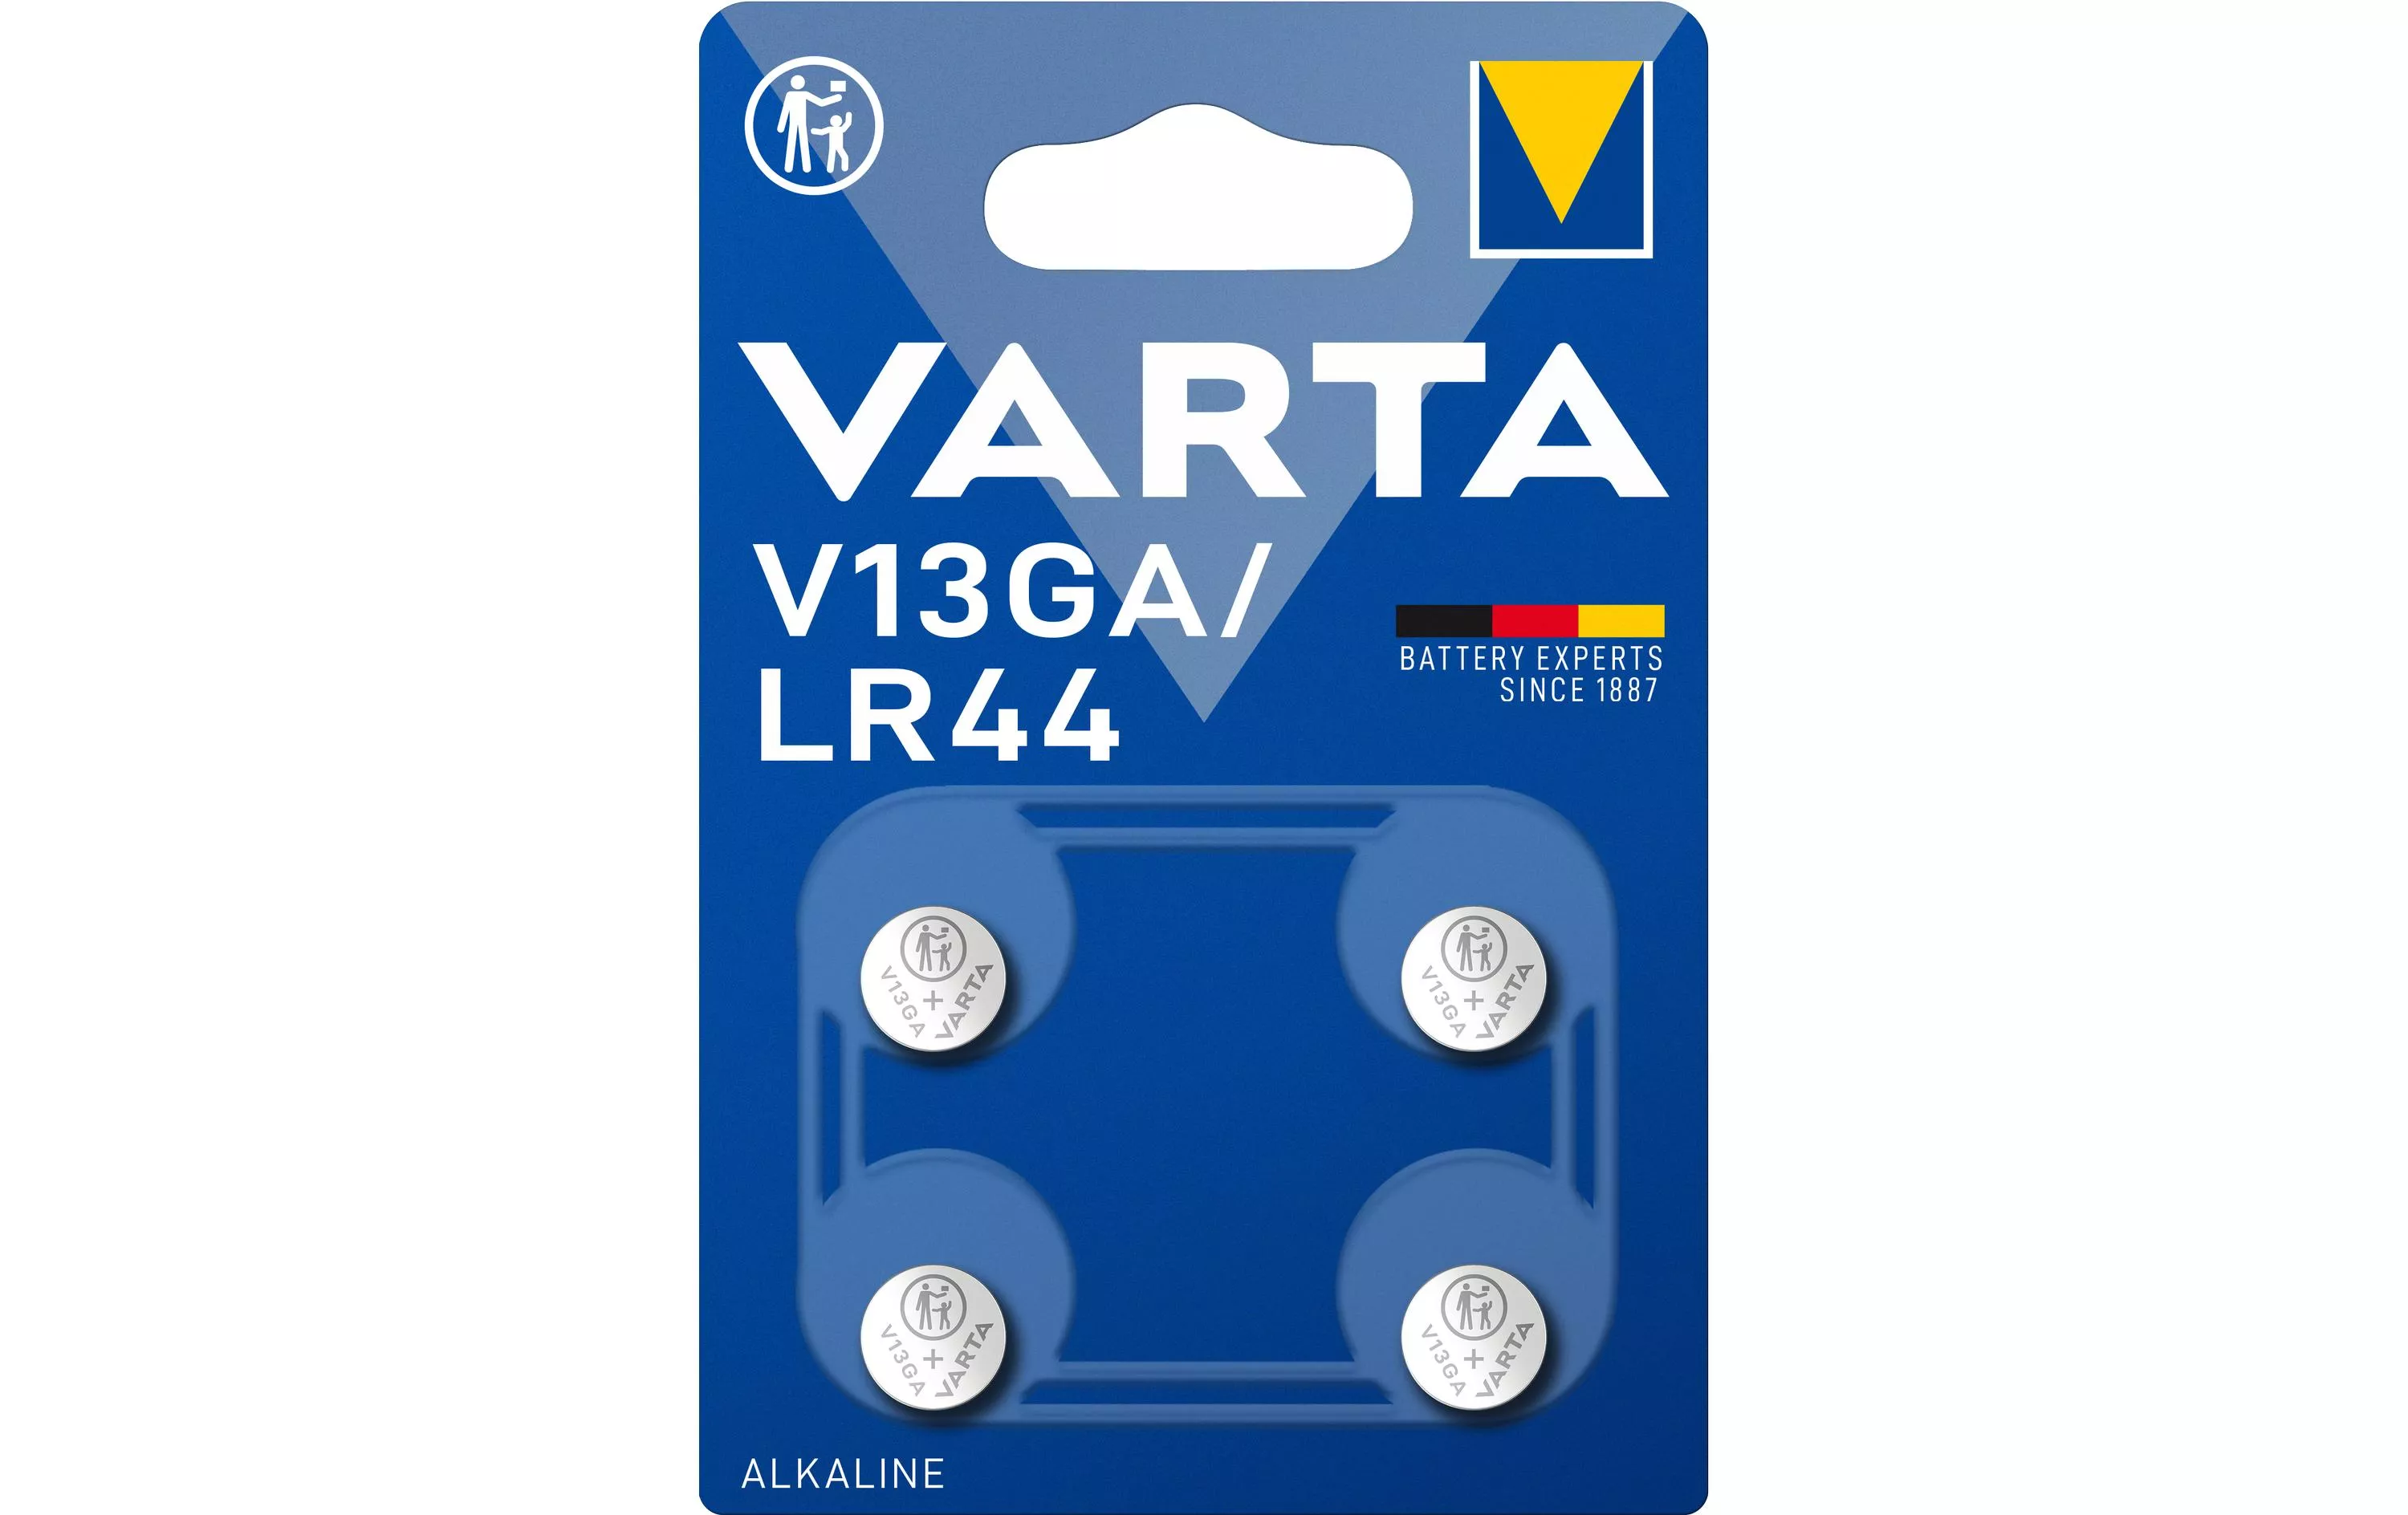 Pila a bottone Varta V13GA / LR44 4 pezzi